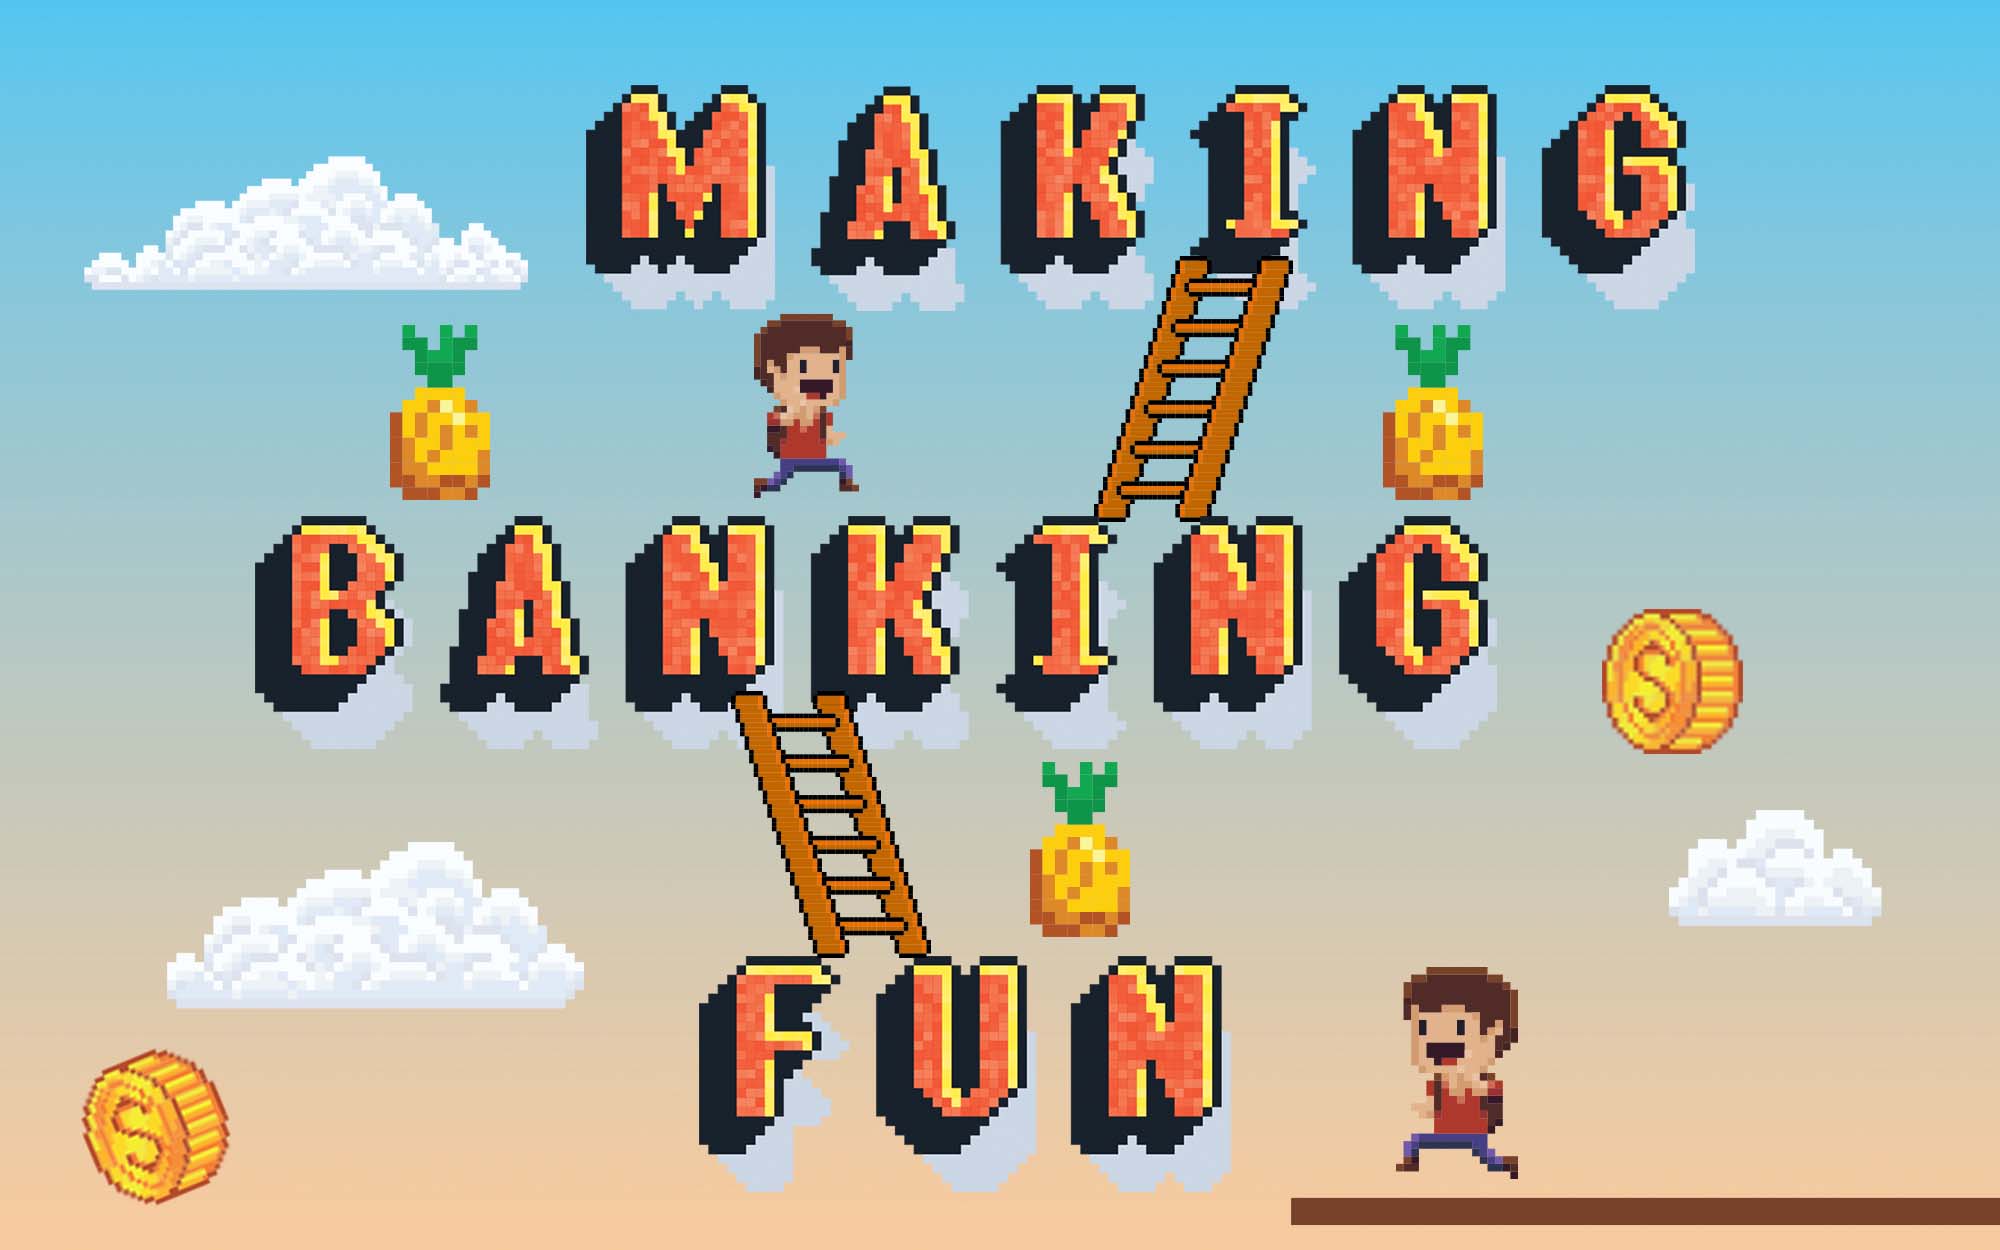 Banking gamification illustration